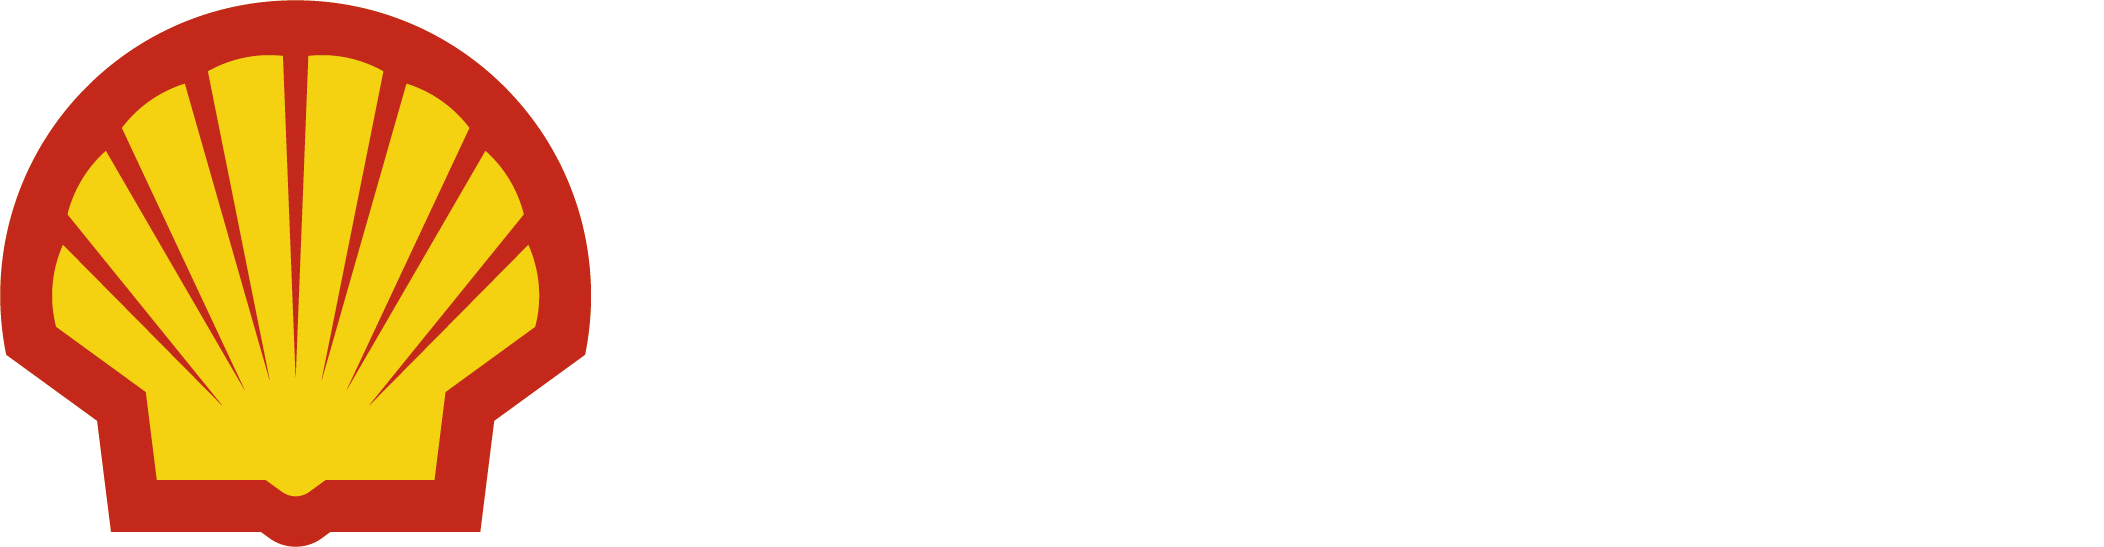 shell_logo1.png